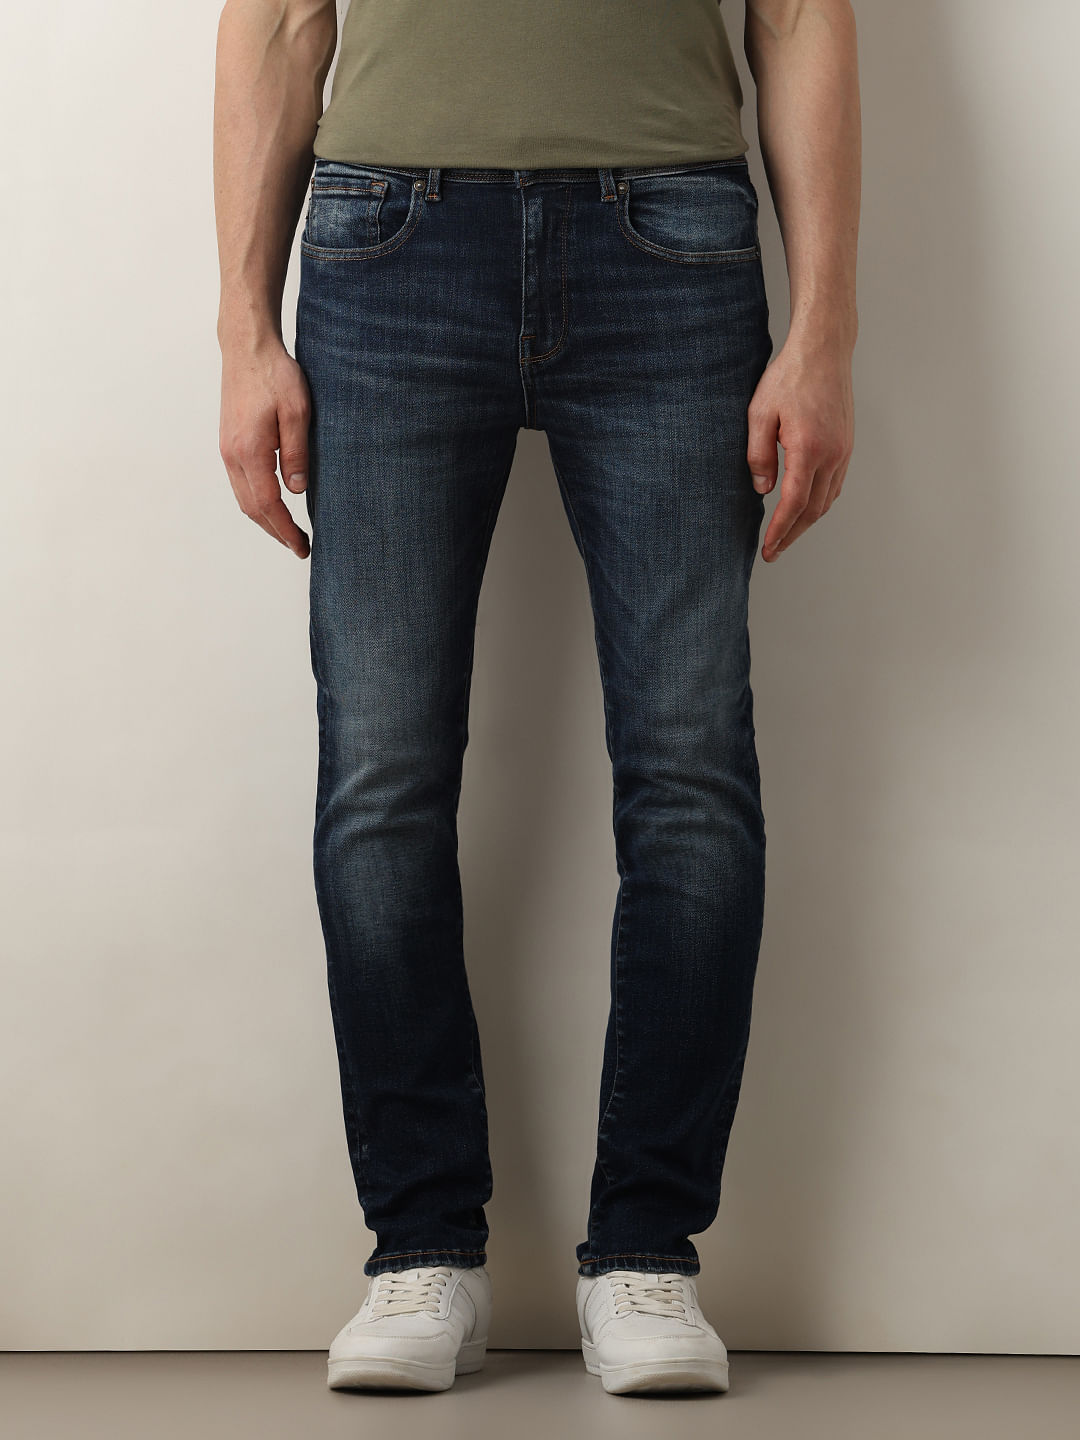 Buy Diesel Jeans Blue Denim Vintage Pants Men Women Size XS / S / W26 L29 /  26 X 29 Made in Italy Online in India - Etsy